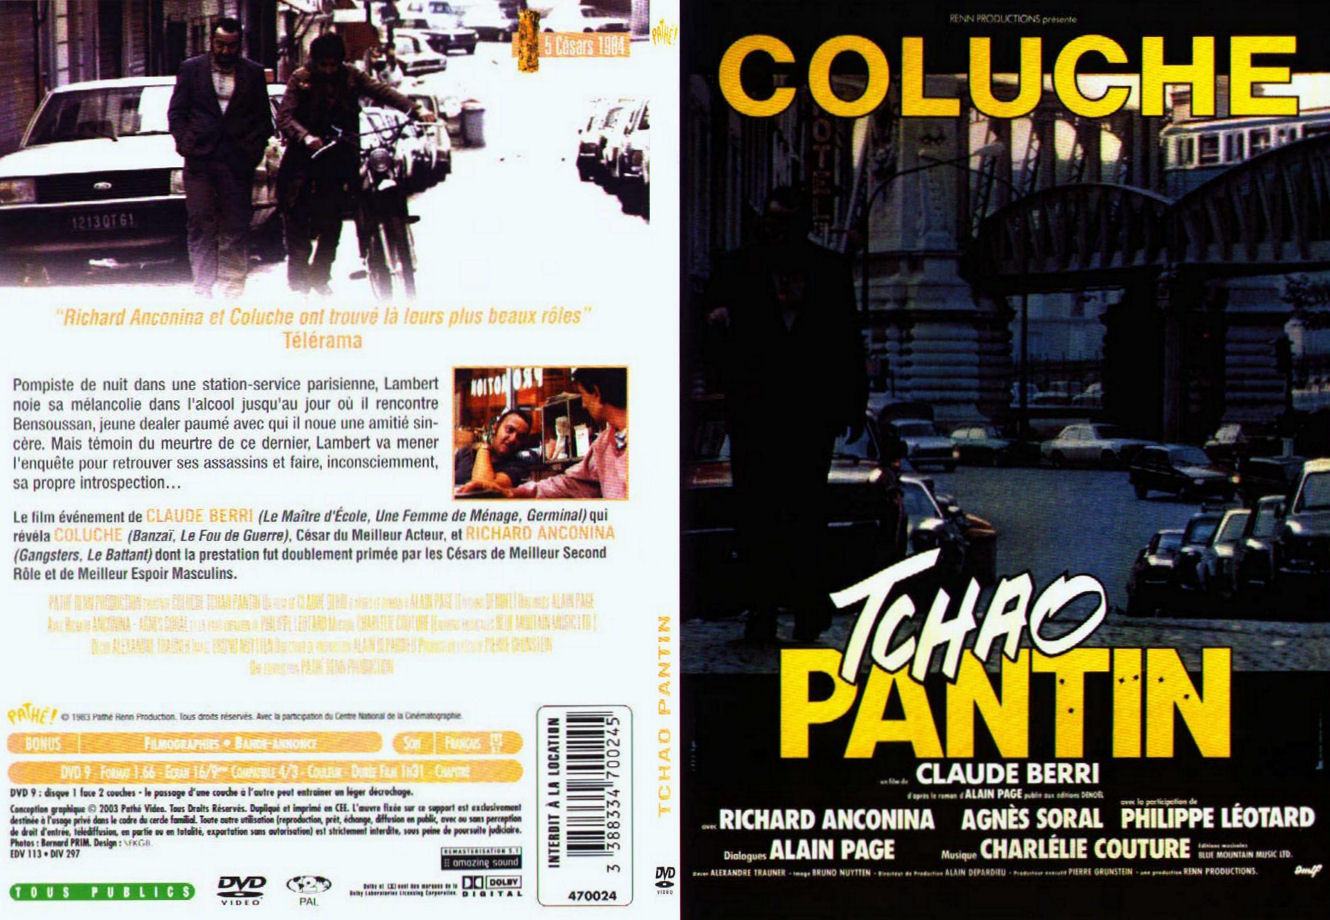 Jaquette DVD Tchao Pantin - SLIM